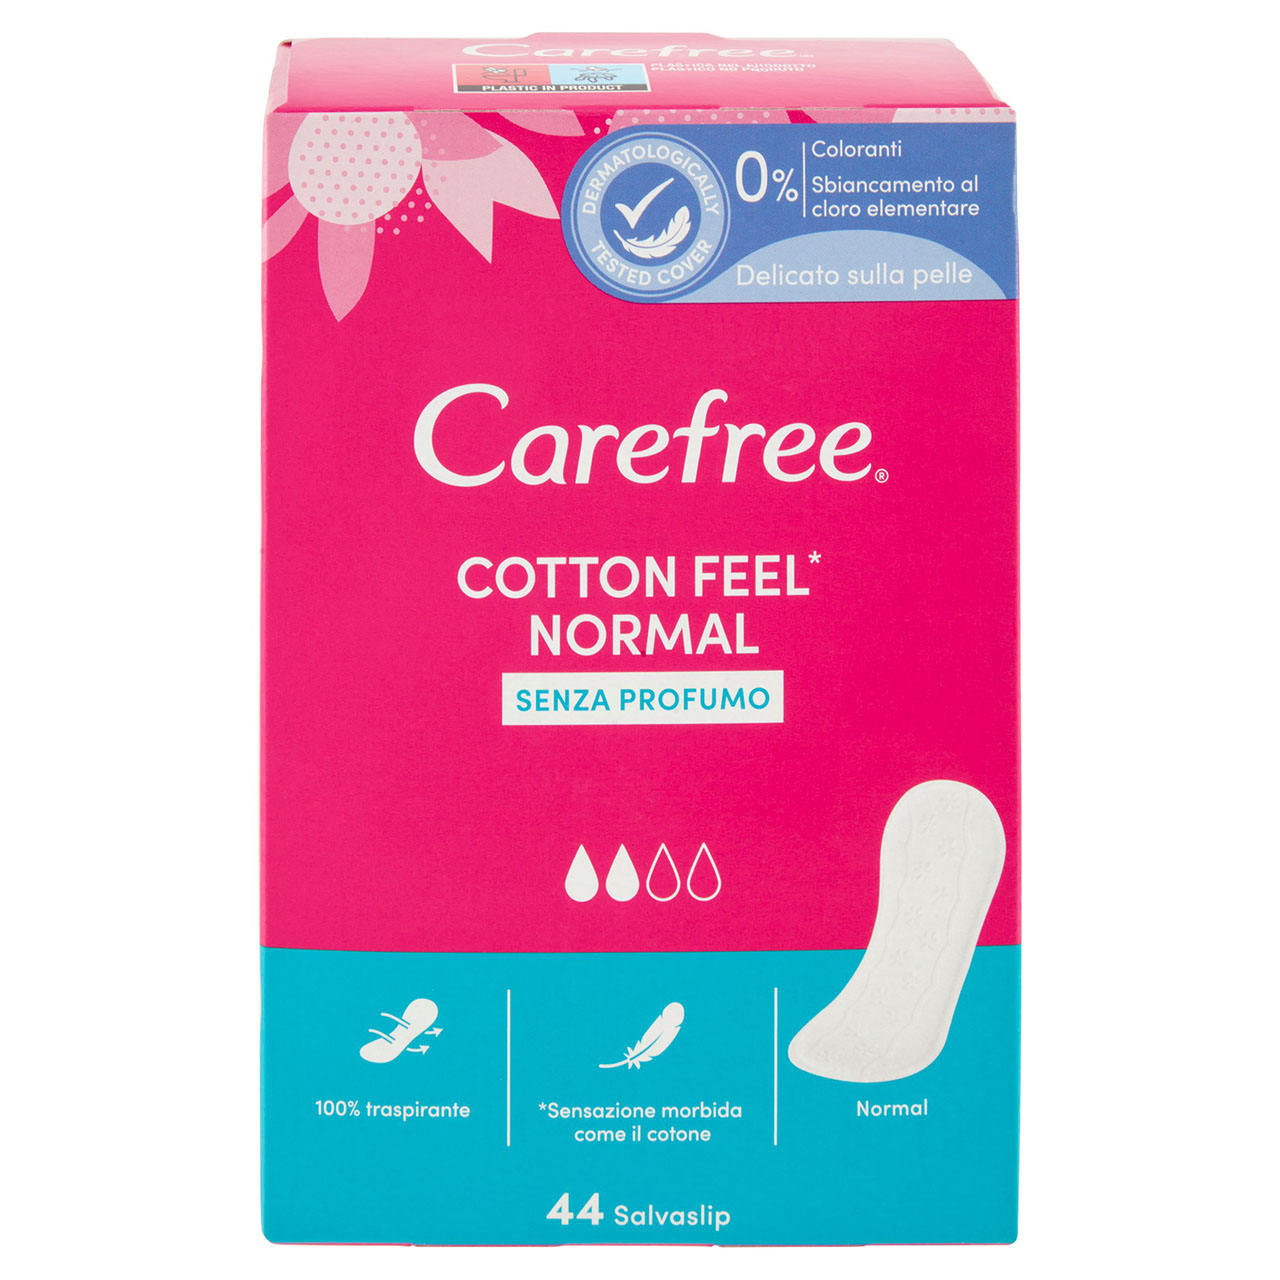 Carefree Cotton Feel Salvaslip in vendita online